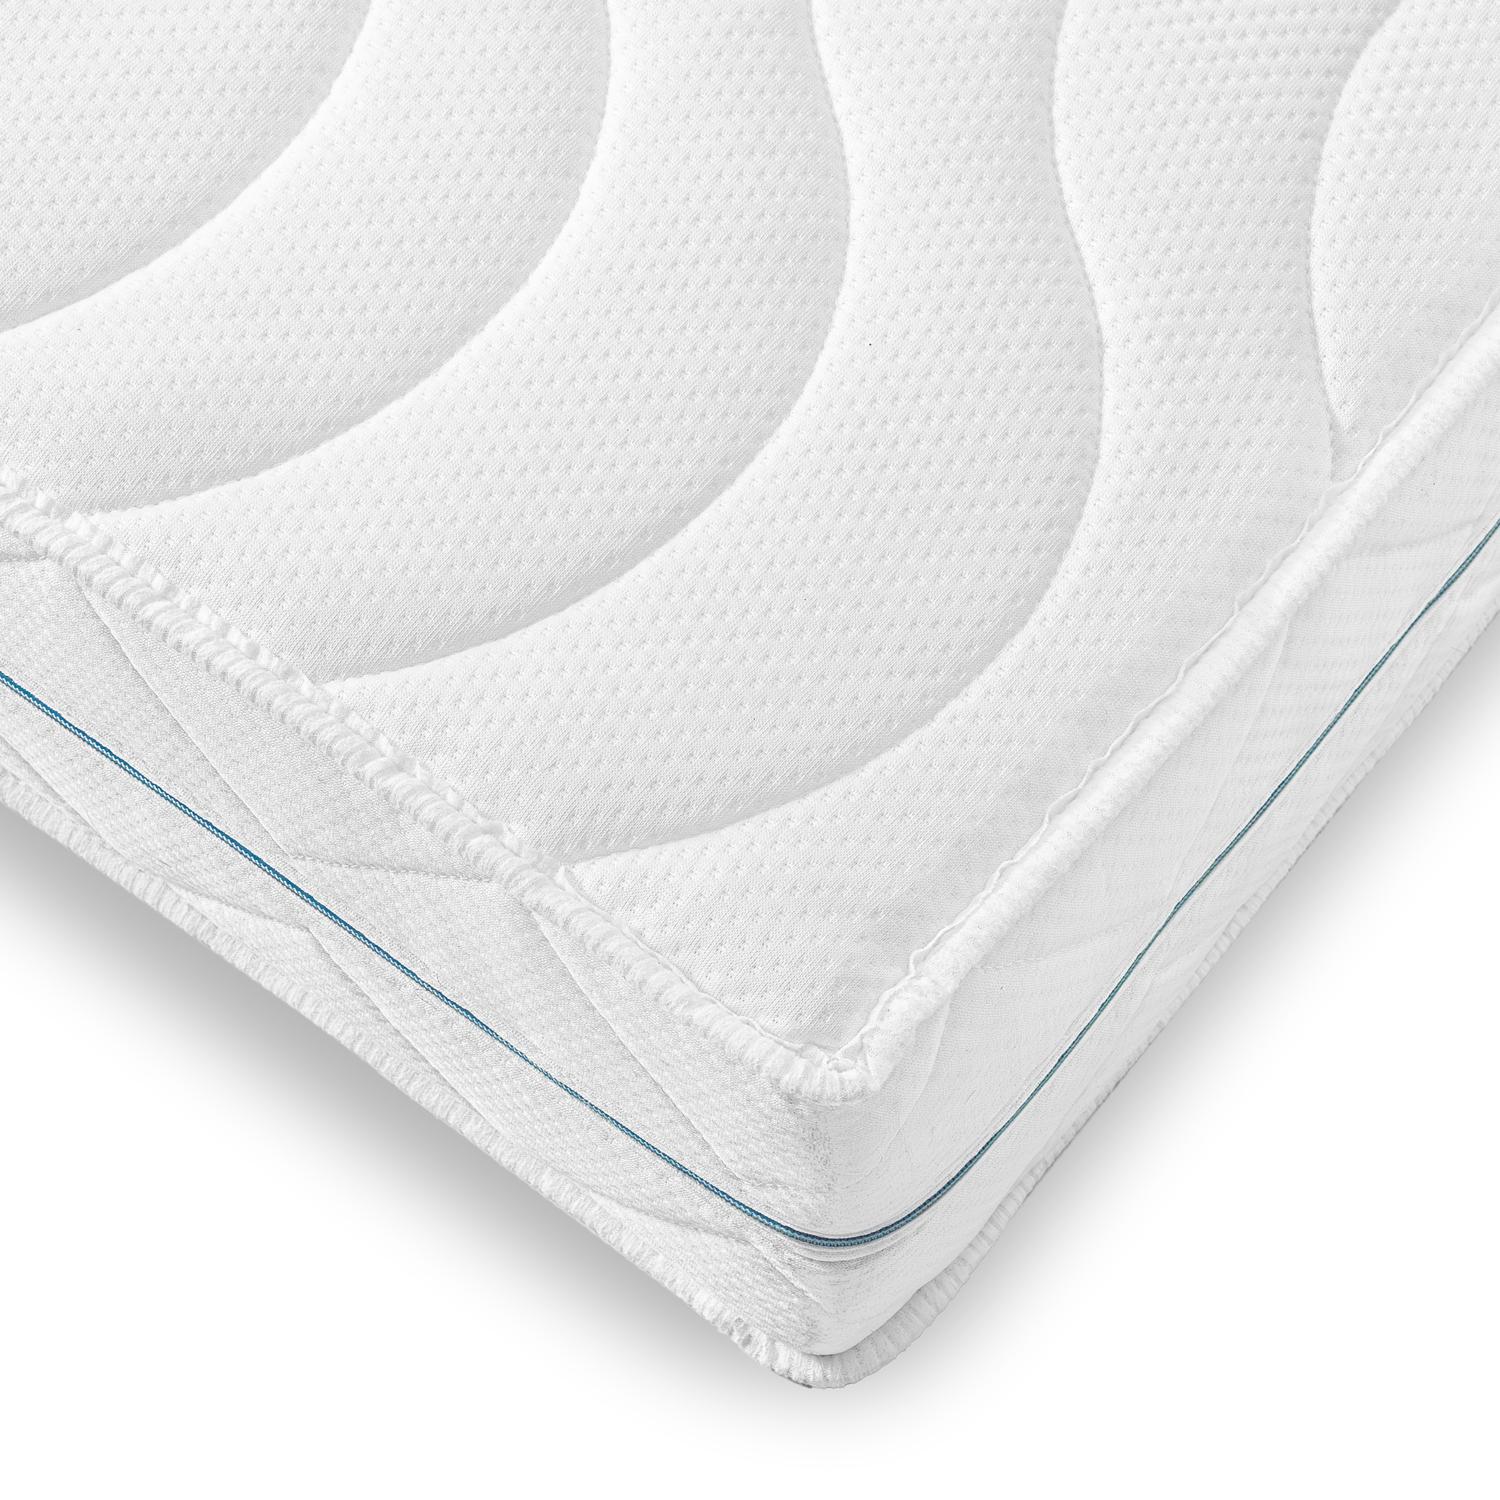 Supportho Premium mattress cover 100 x 200 cm, height 18 cm